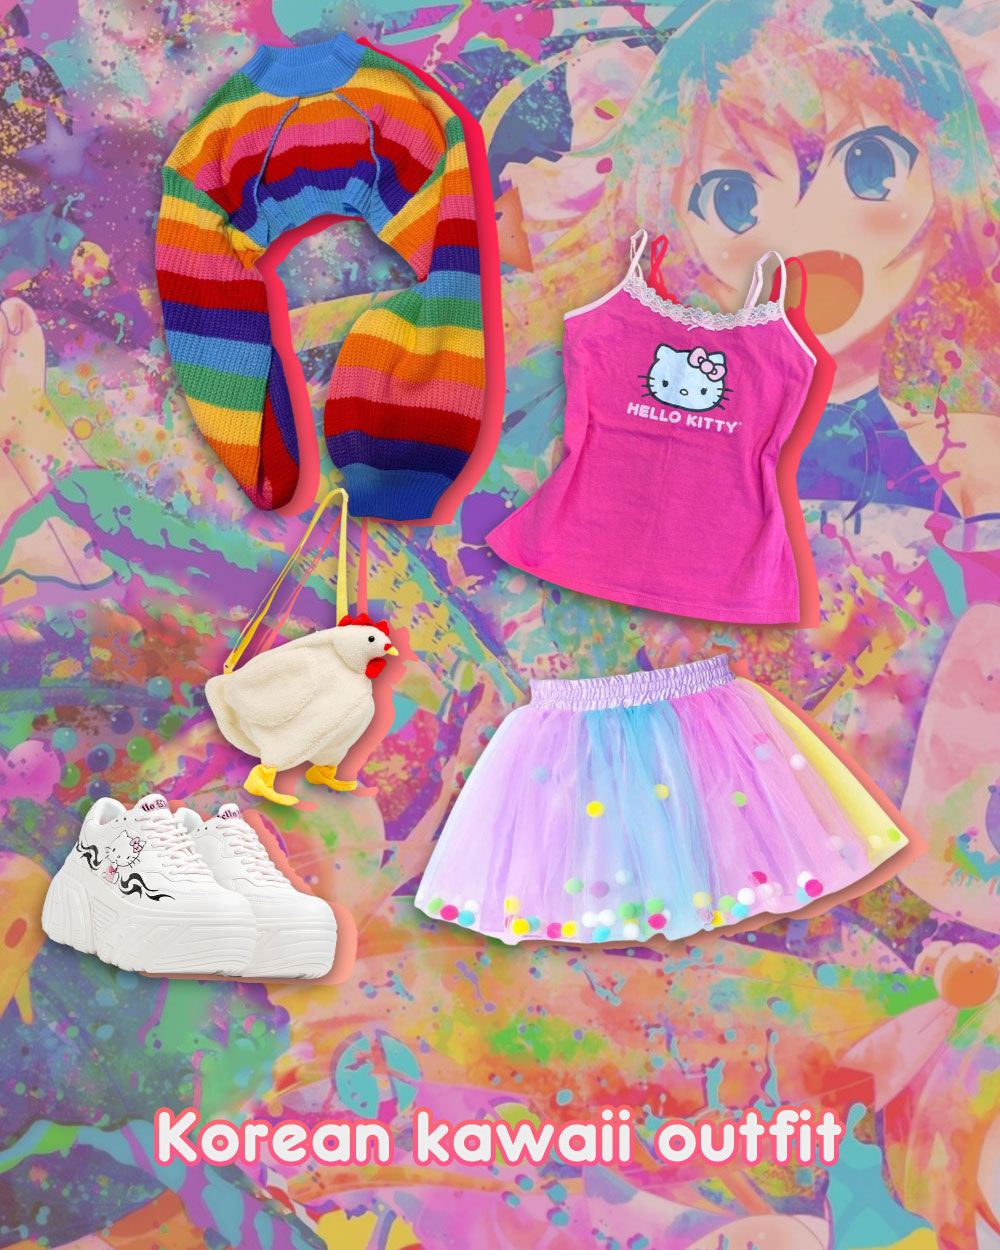 Korean kawaii outfit inspirations - rainbow crop cardigan, chicken bag, hello kitty top, rainbow miniskirts, platform sneakers